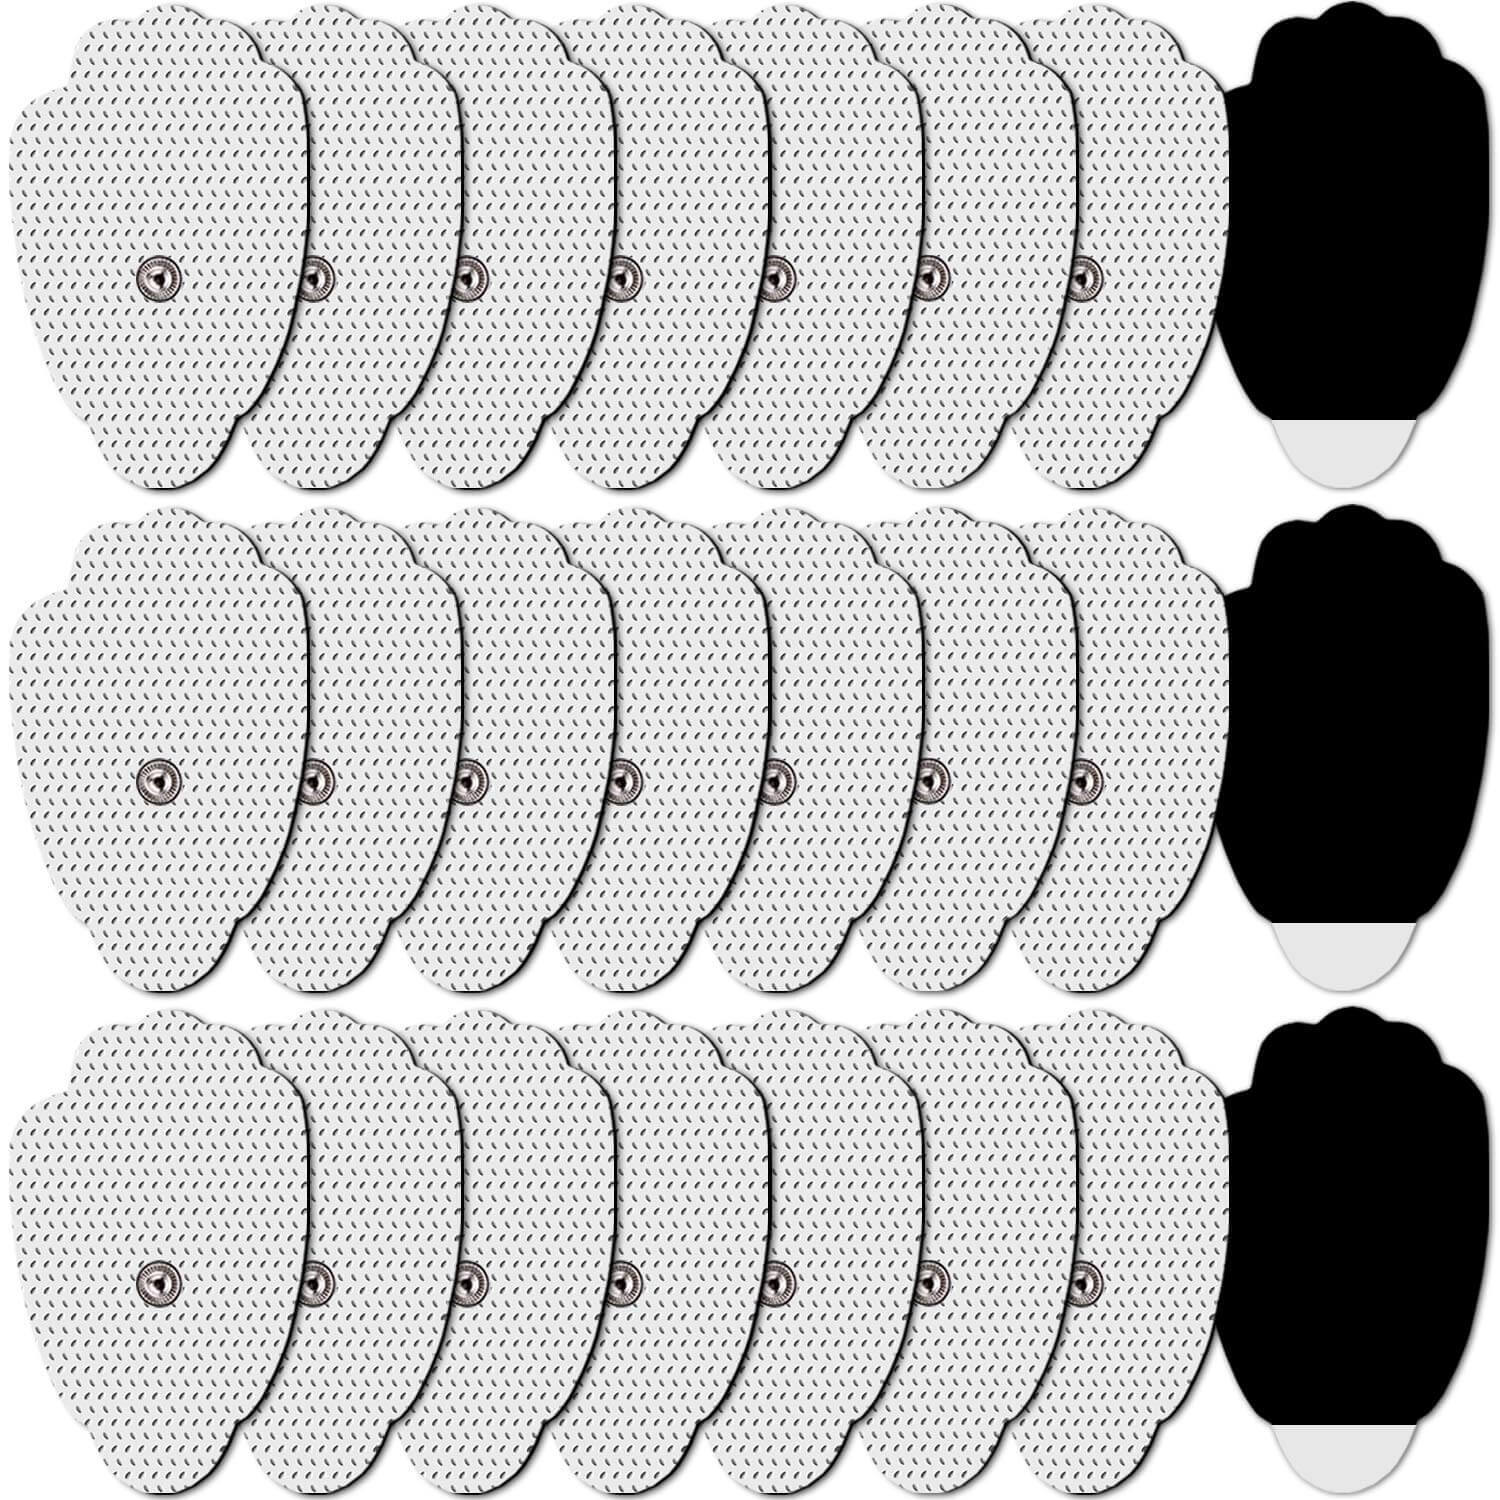 DONECO replacement pads for tens unit - Snap 24 Pcs TENS Electrodes Pads